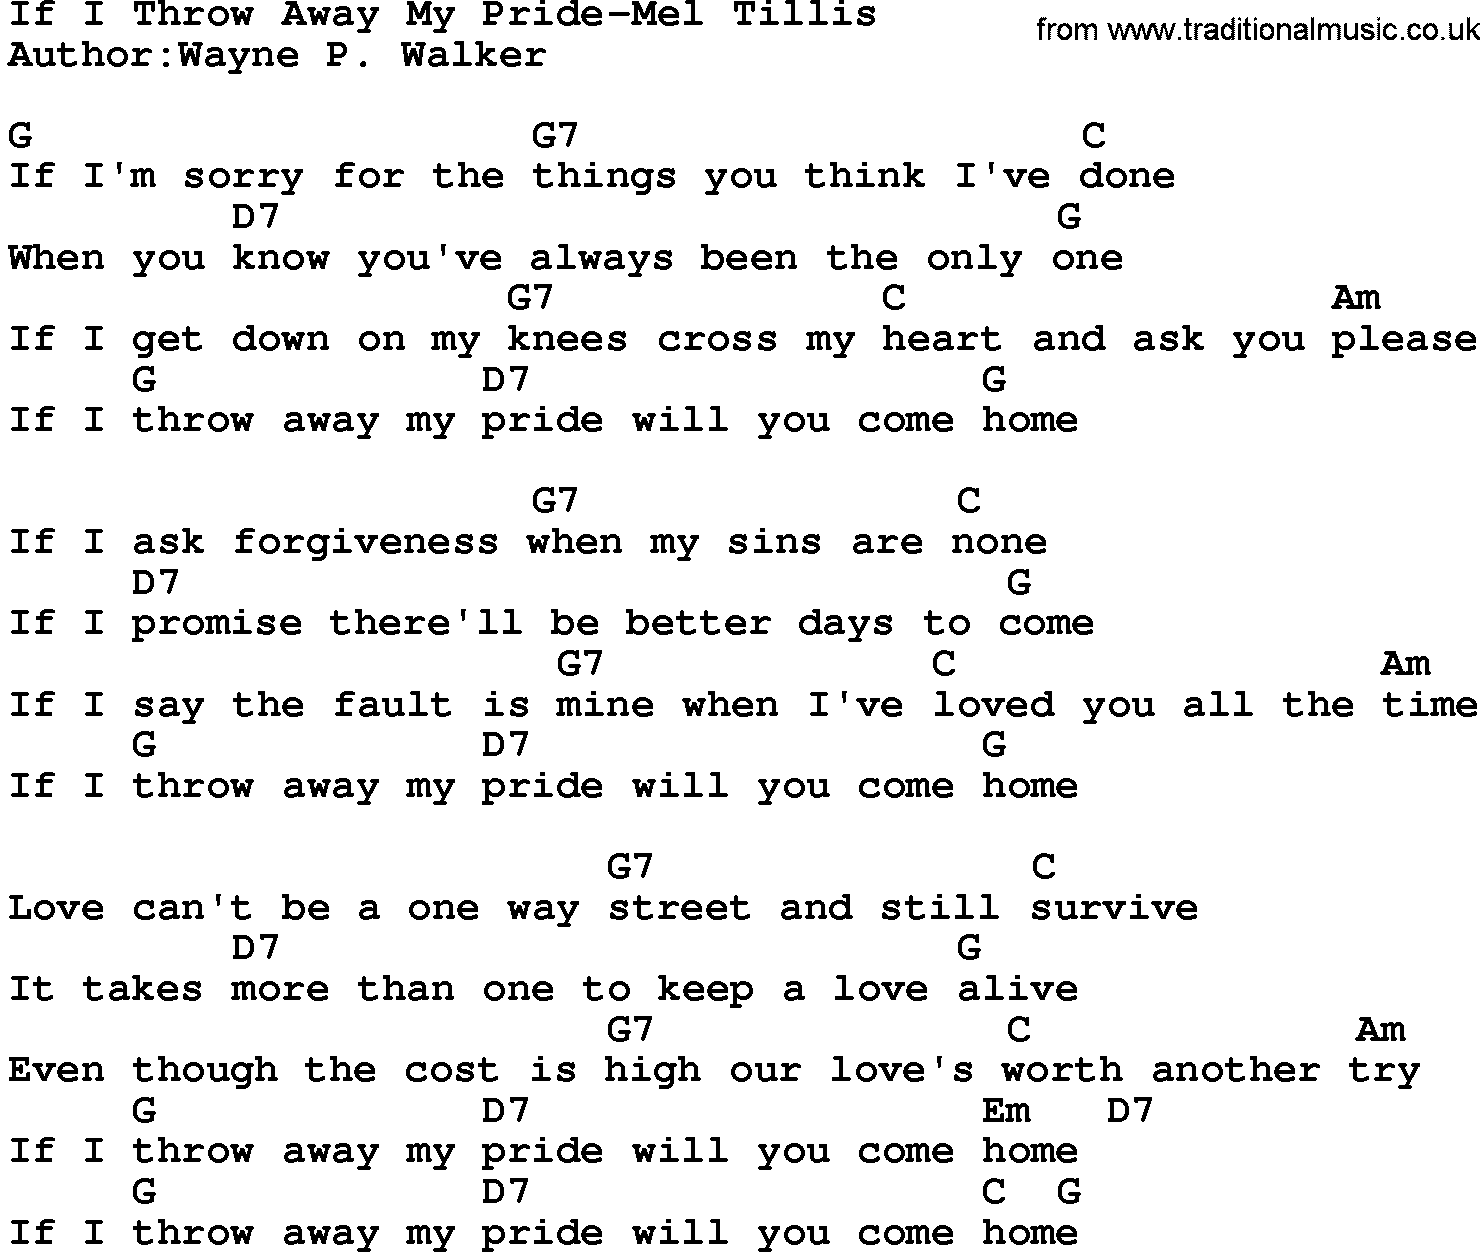 Country music song: If I Throw Away My Pride-Mel Tillis lyrics and chords